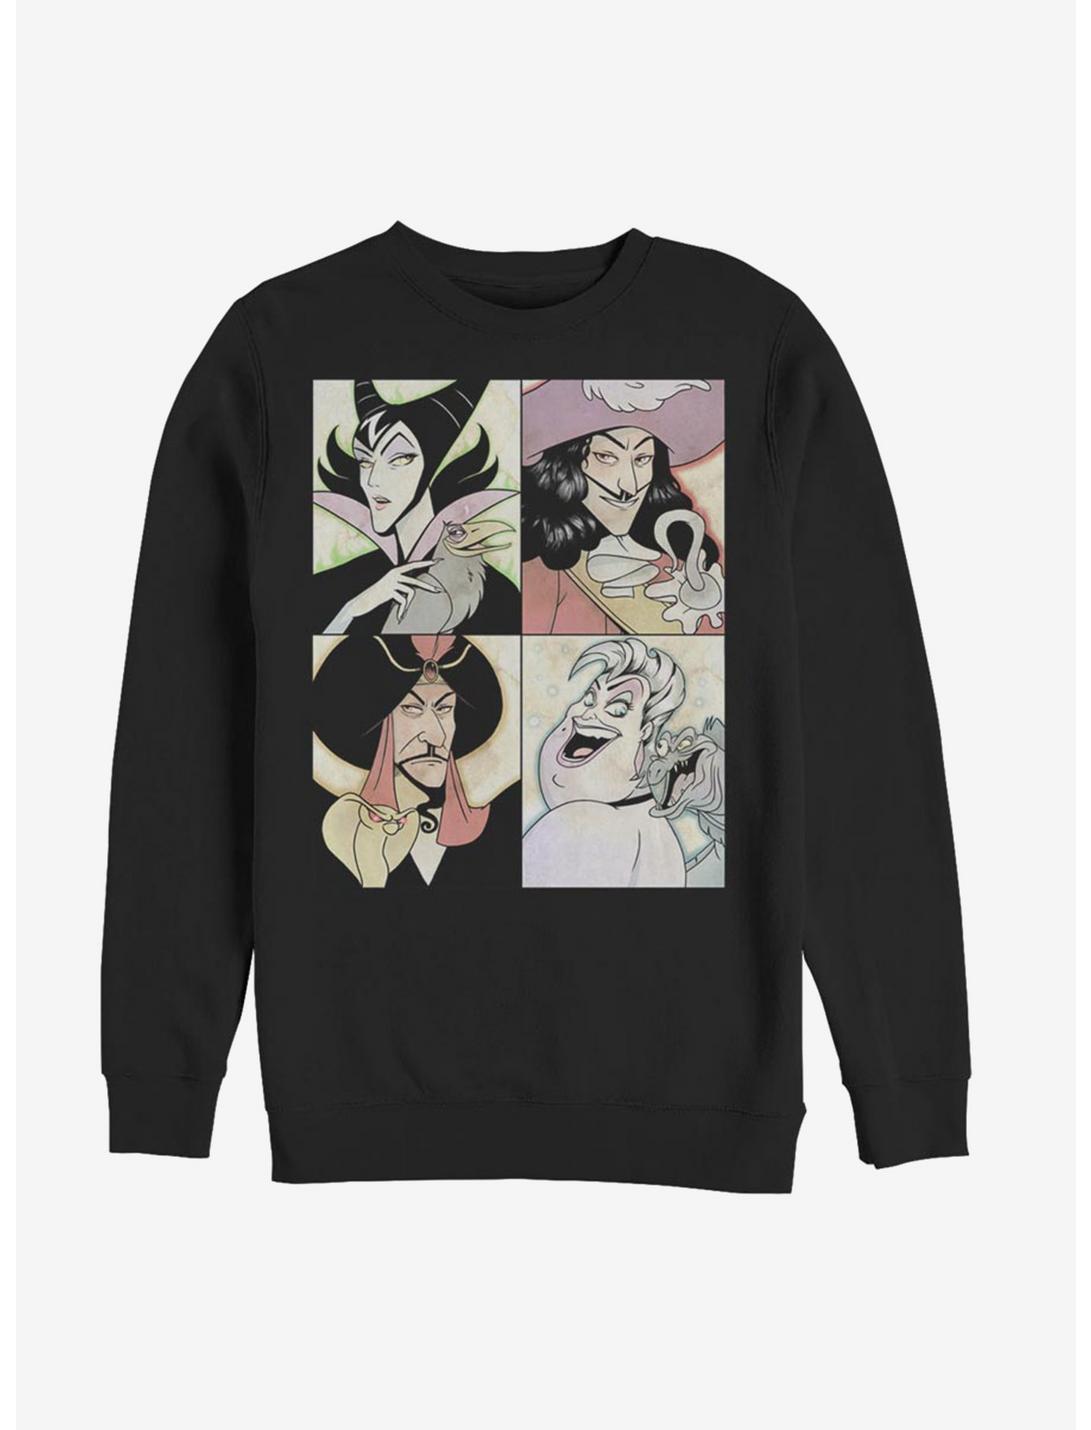 Disney Villains Anime Style Portraits Sweatshirt, BLACK, hi-res